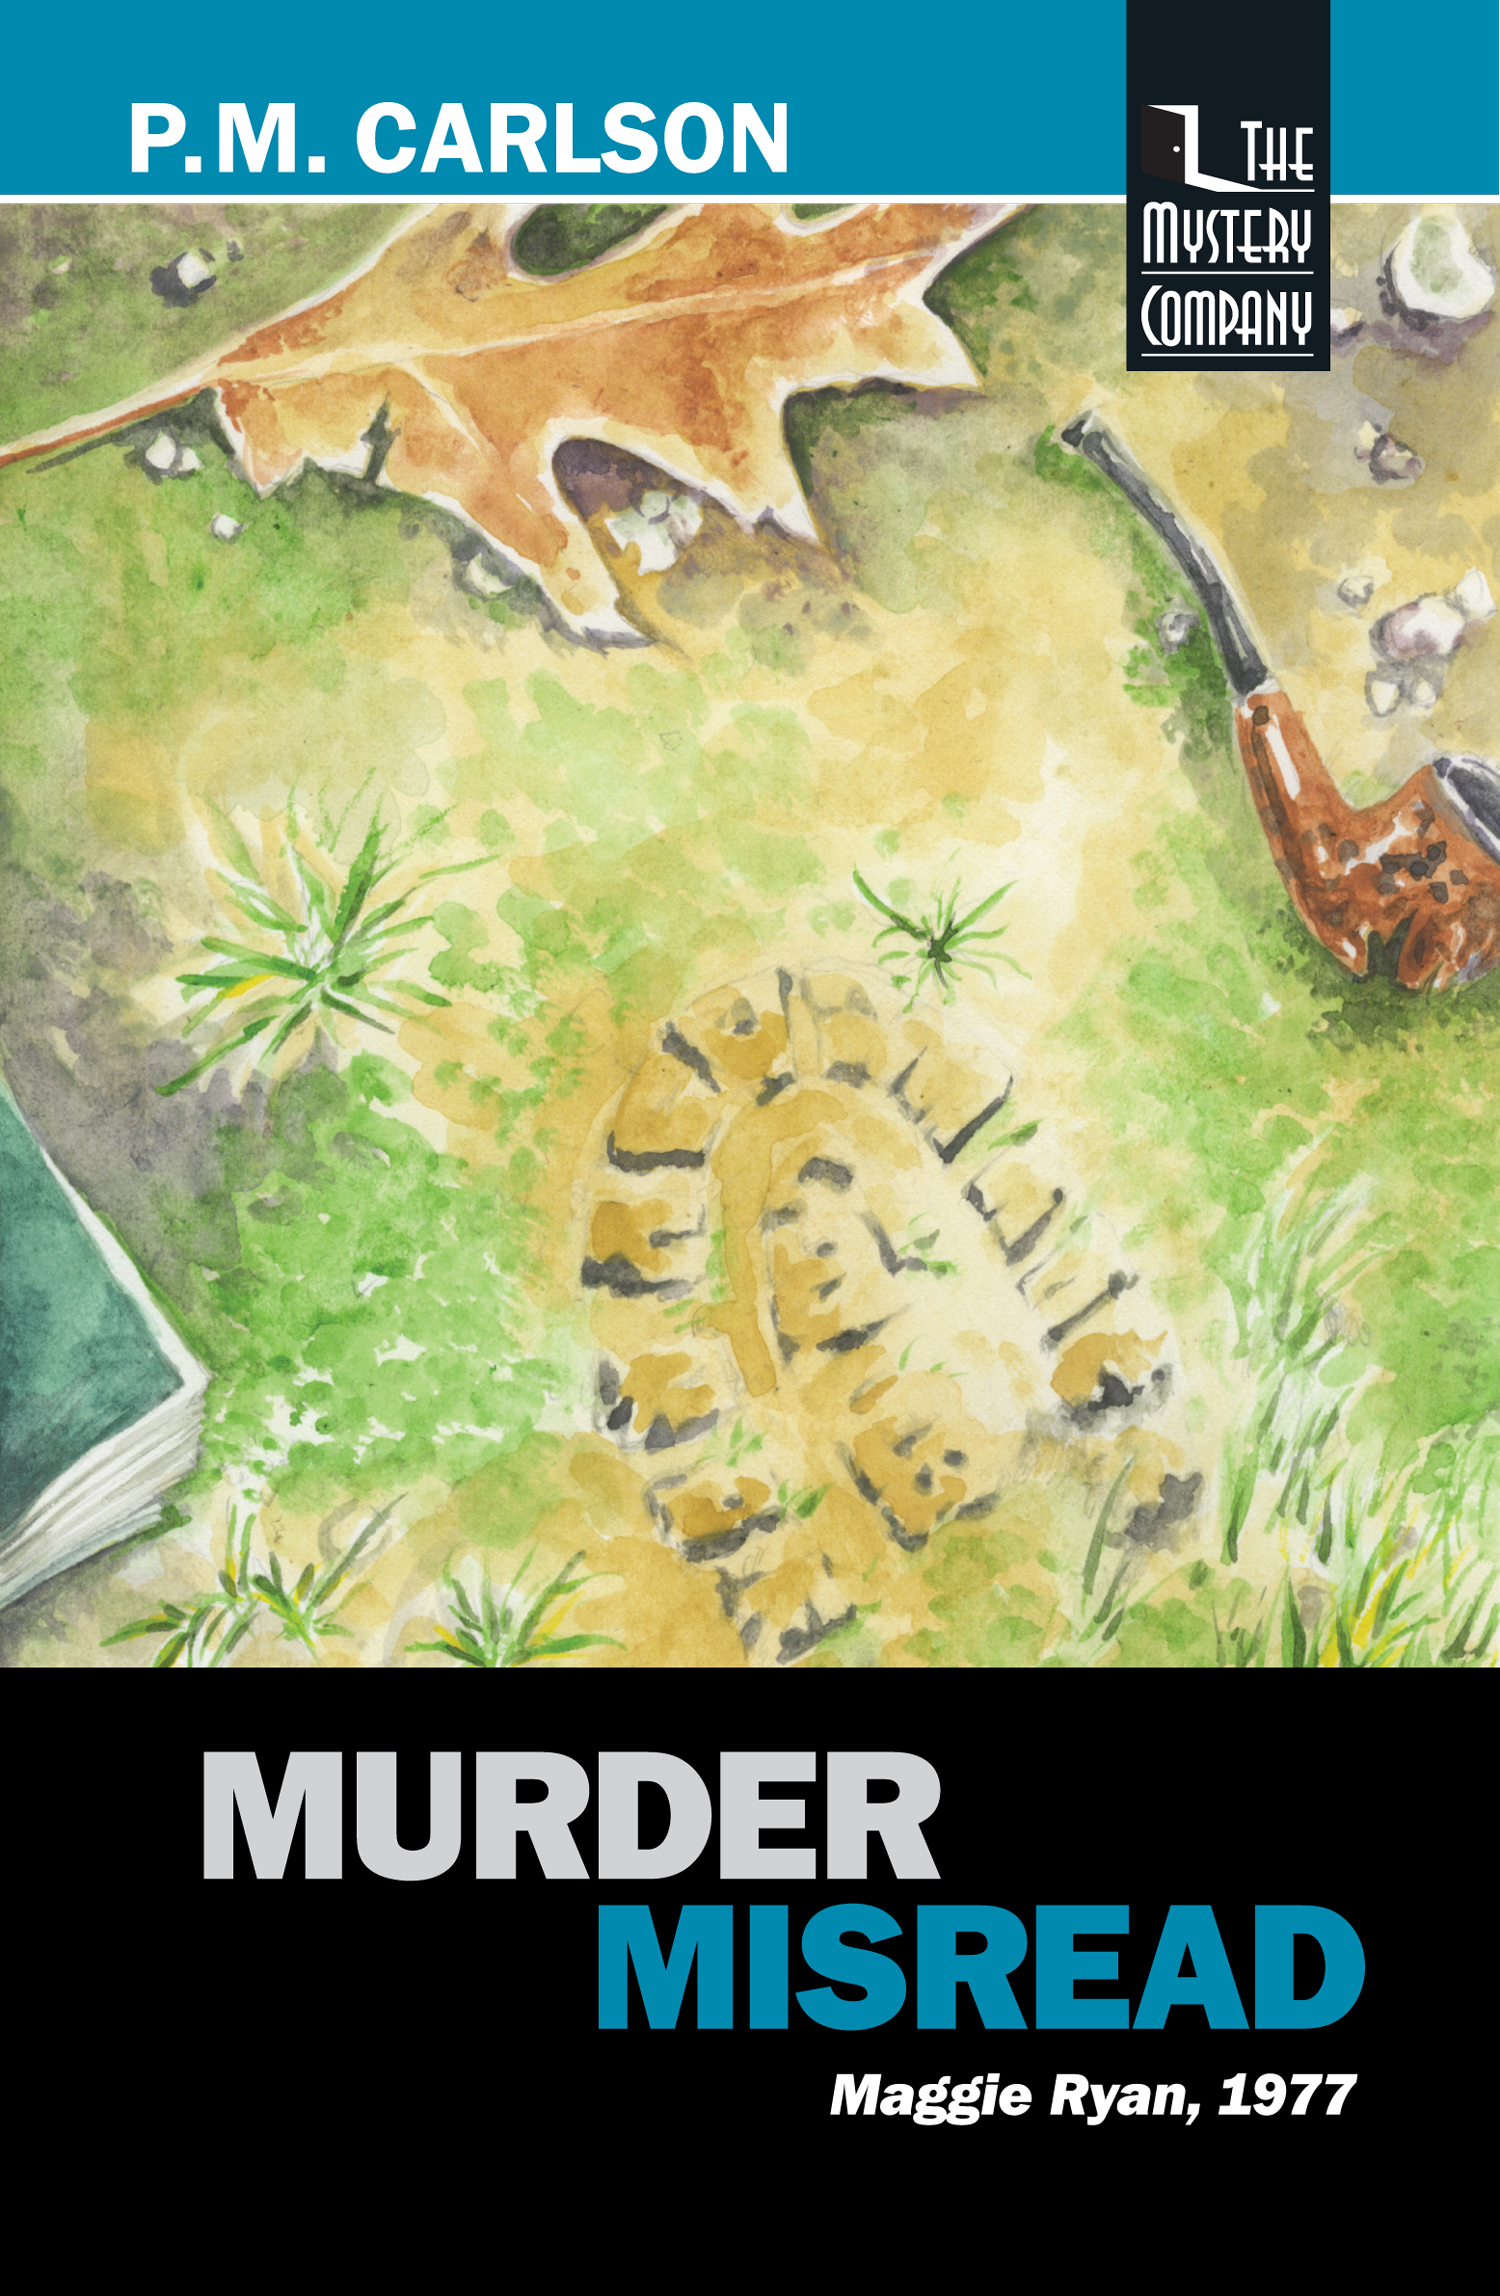 Murder Misread by P.M. Carlson